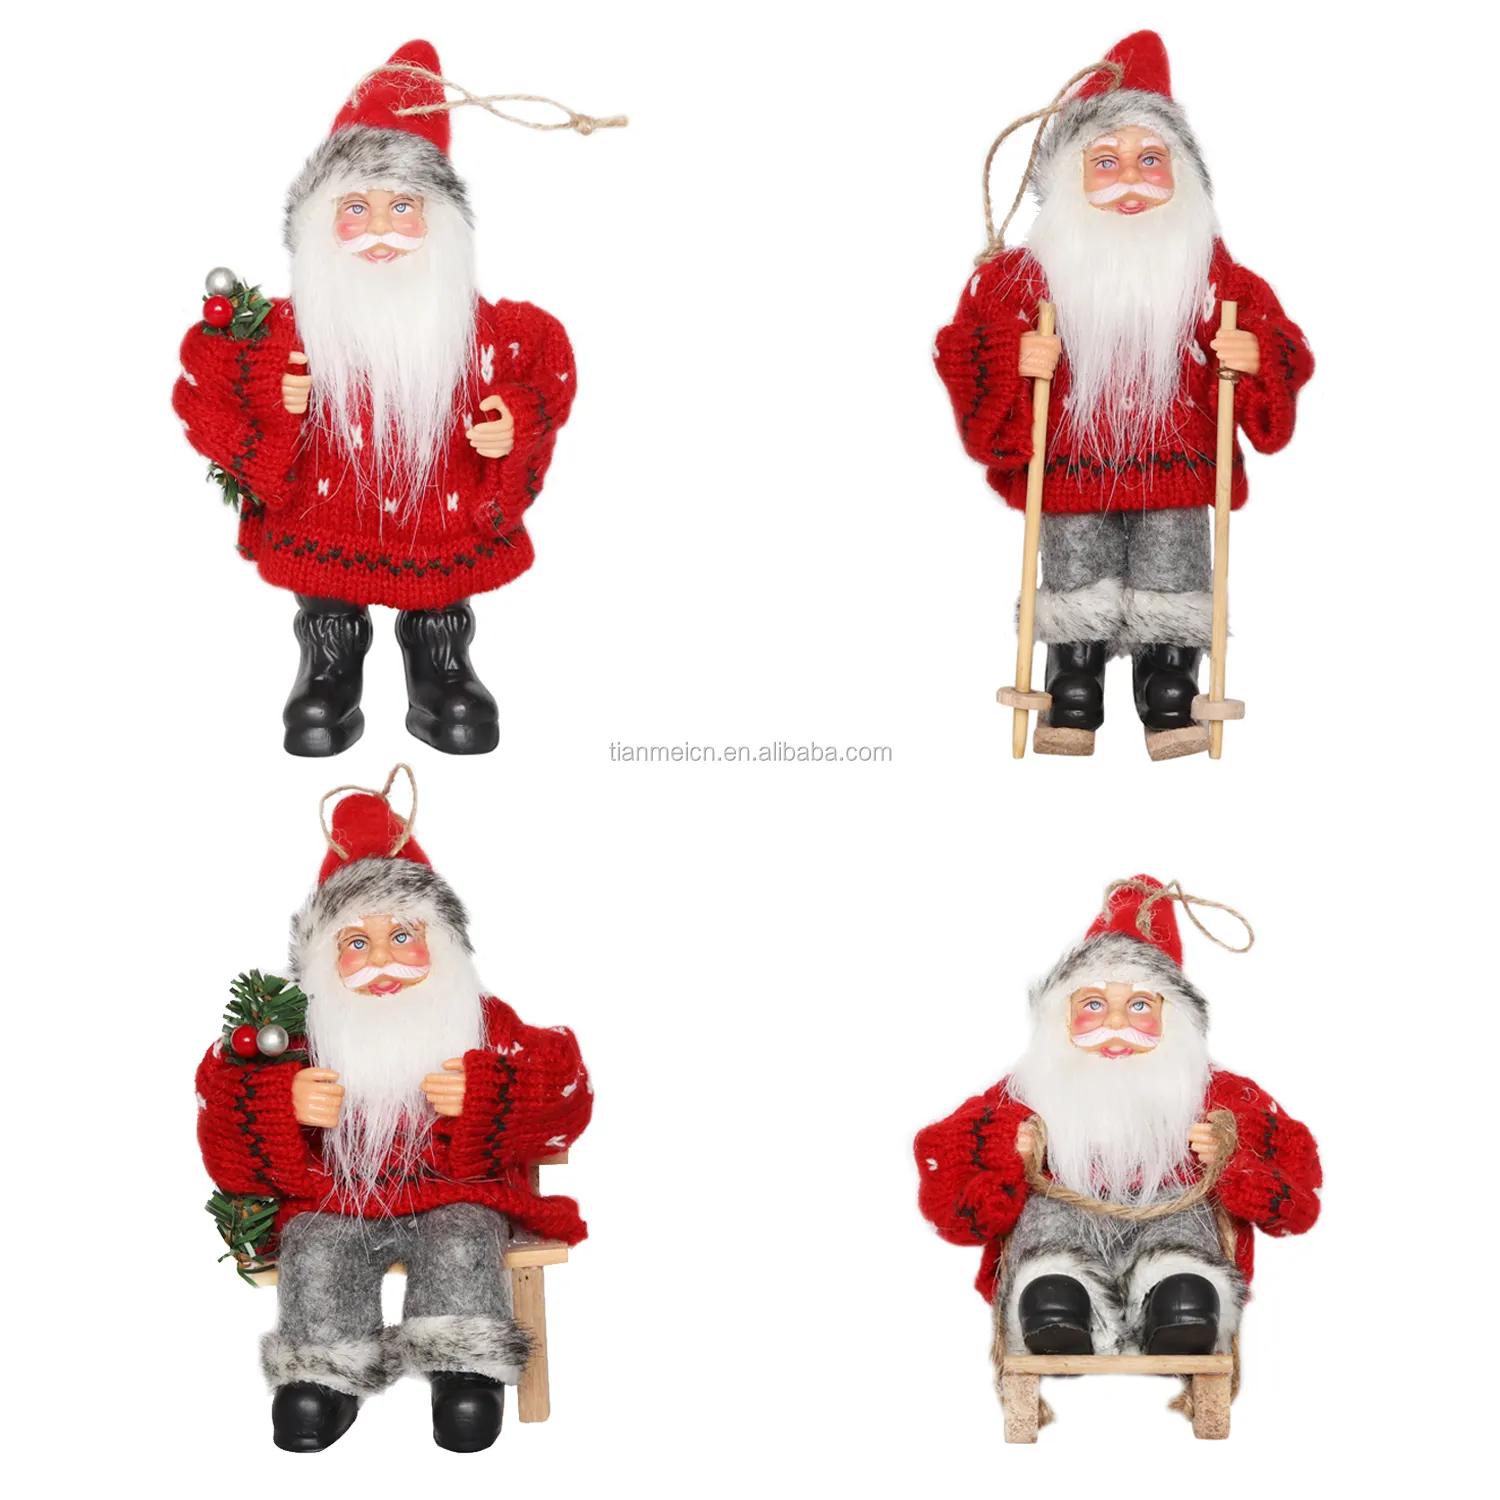 Toy Santa Claus 8"custom Christmas Santa Claus Plush Toys Ornaments Decoration Figurine Doll Small Christmas Gifts Xmas Christmas Tree Decor Set